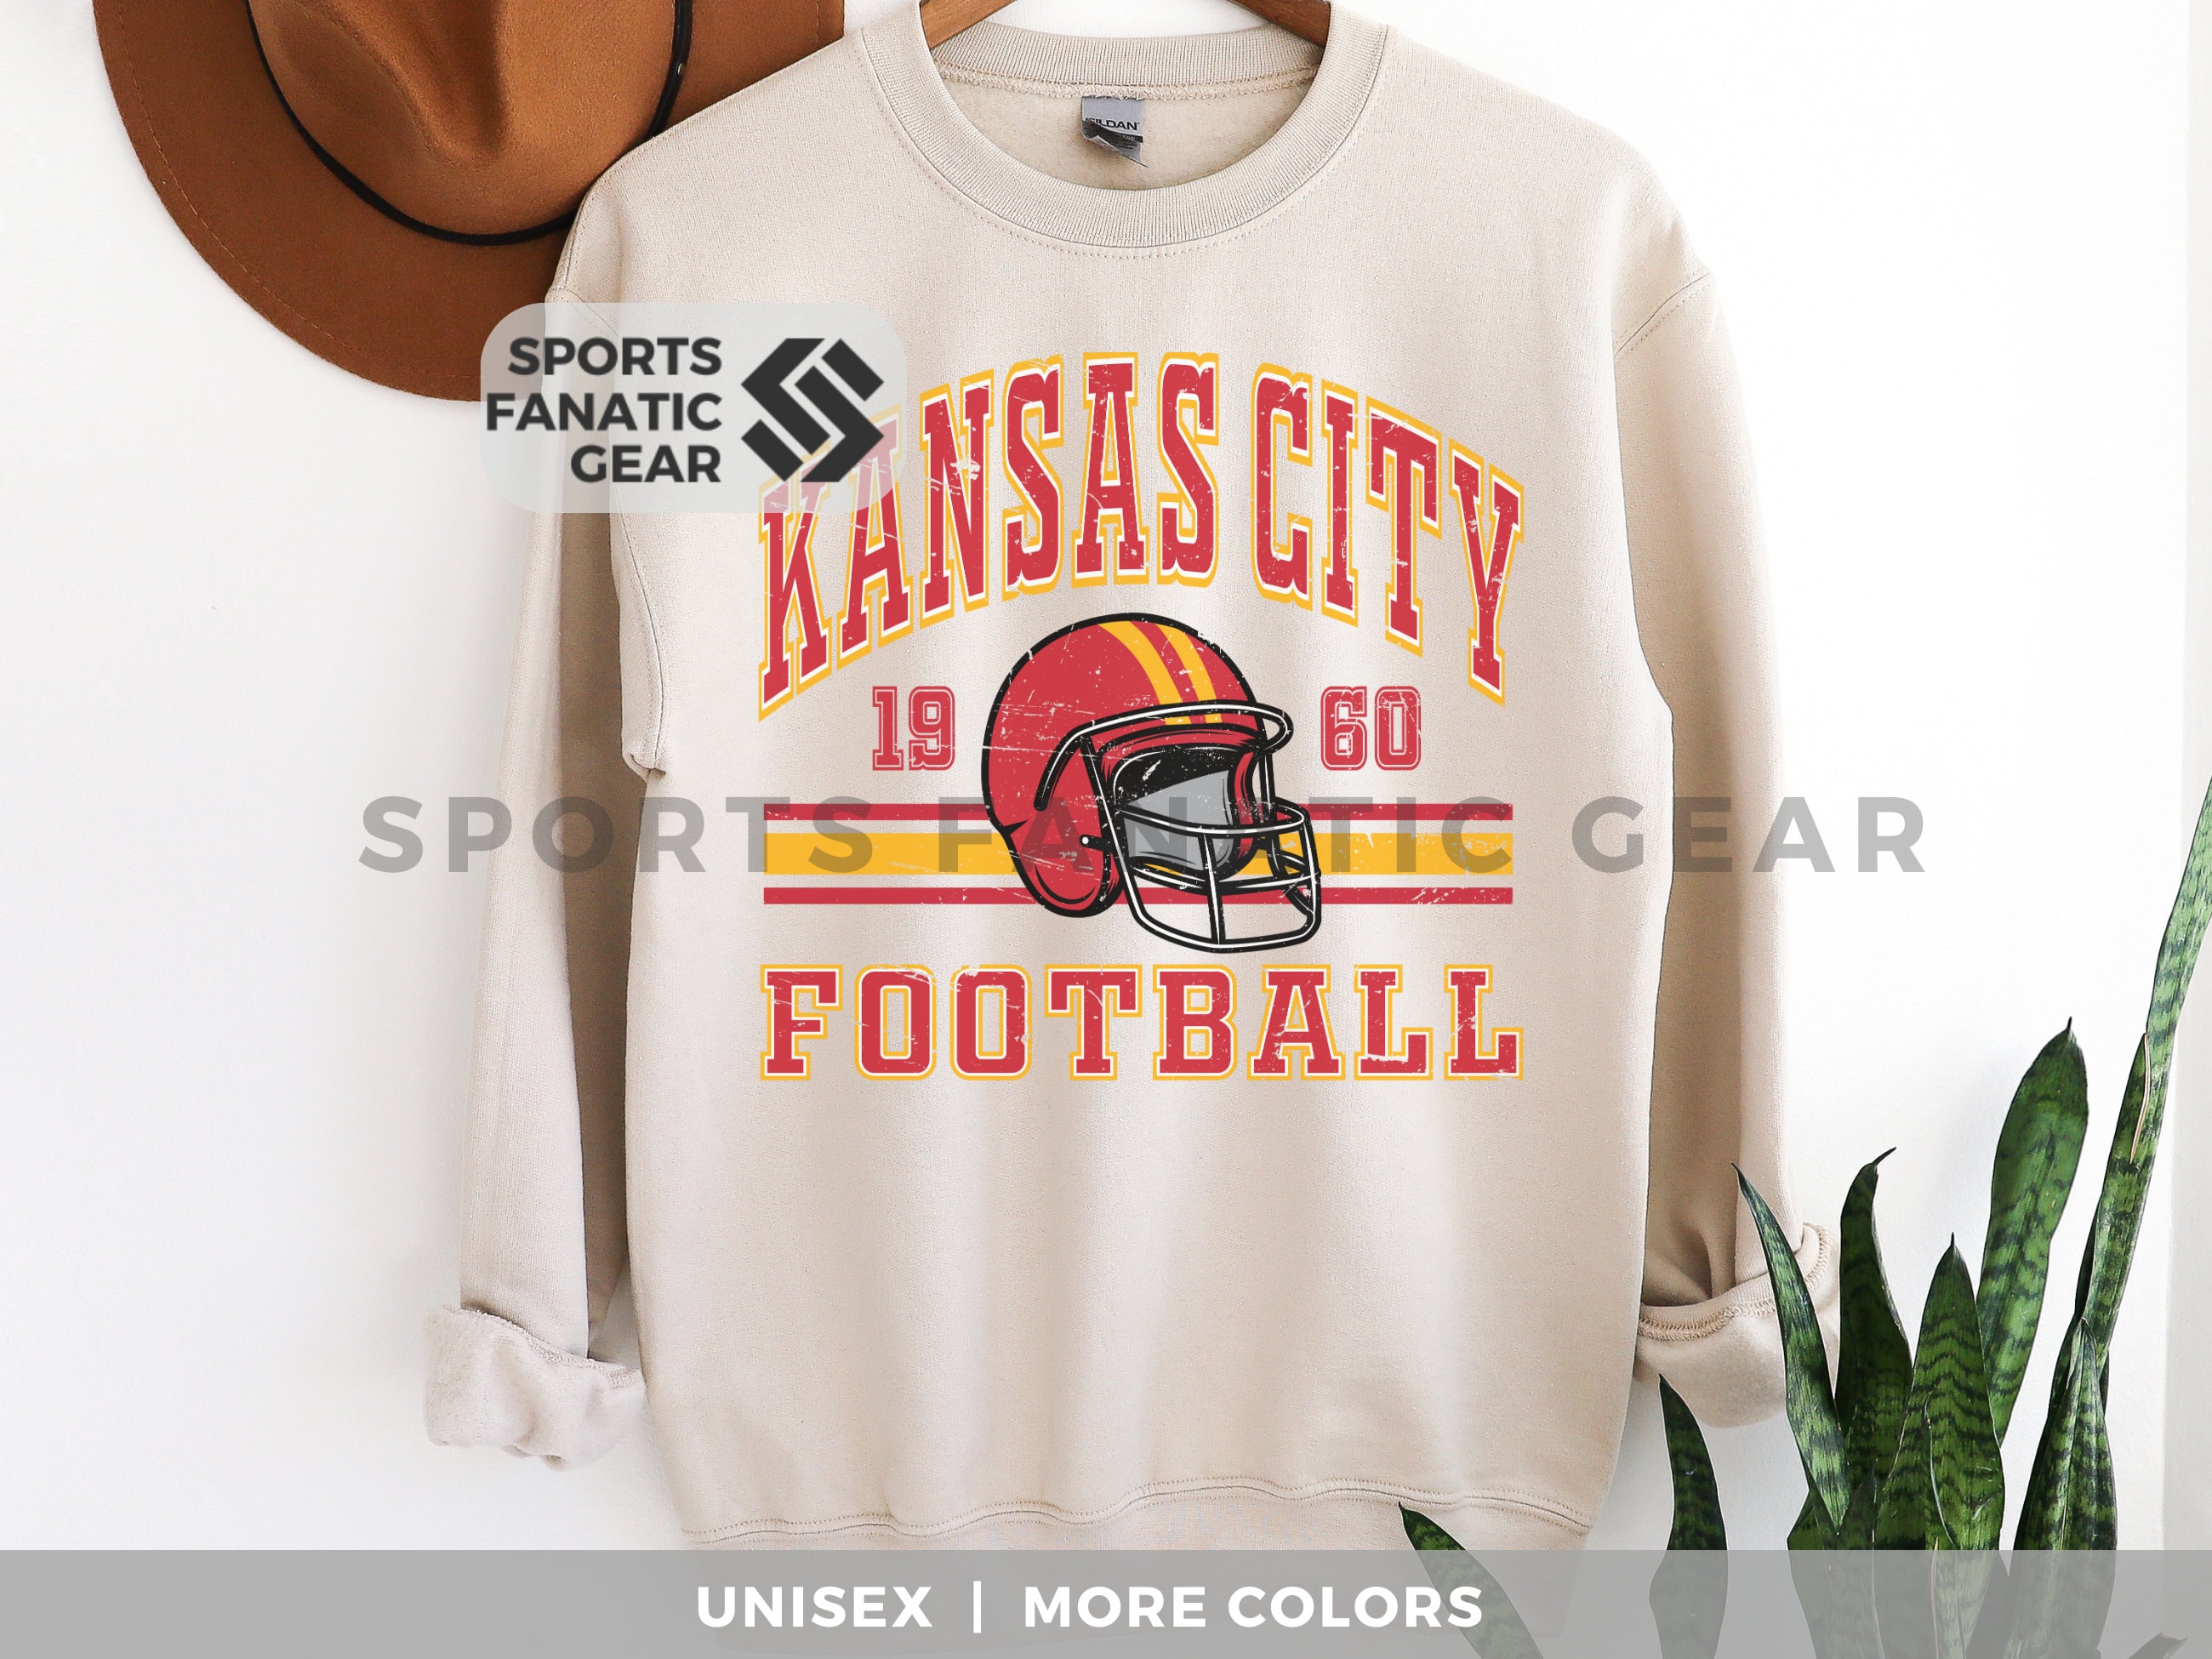 Kansas City Sweatshirt Women, KC Sweatshirts, Cute Kansas City